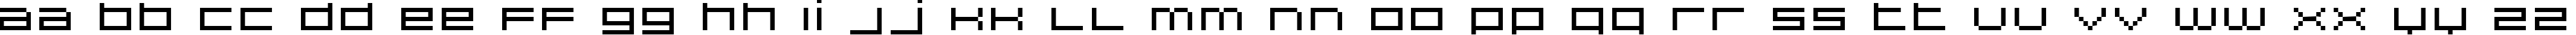 Пример написания английского алфавита шрифтом DS Hiline